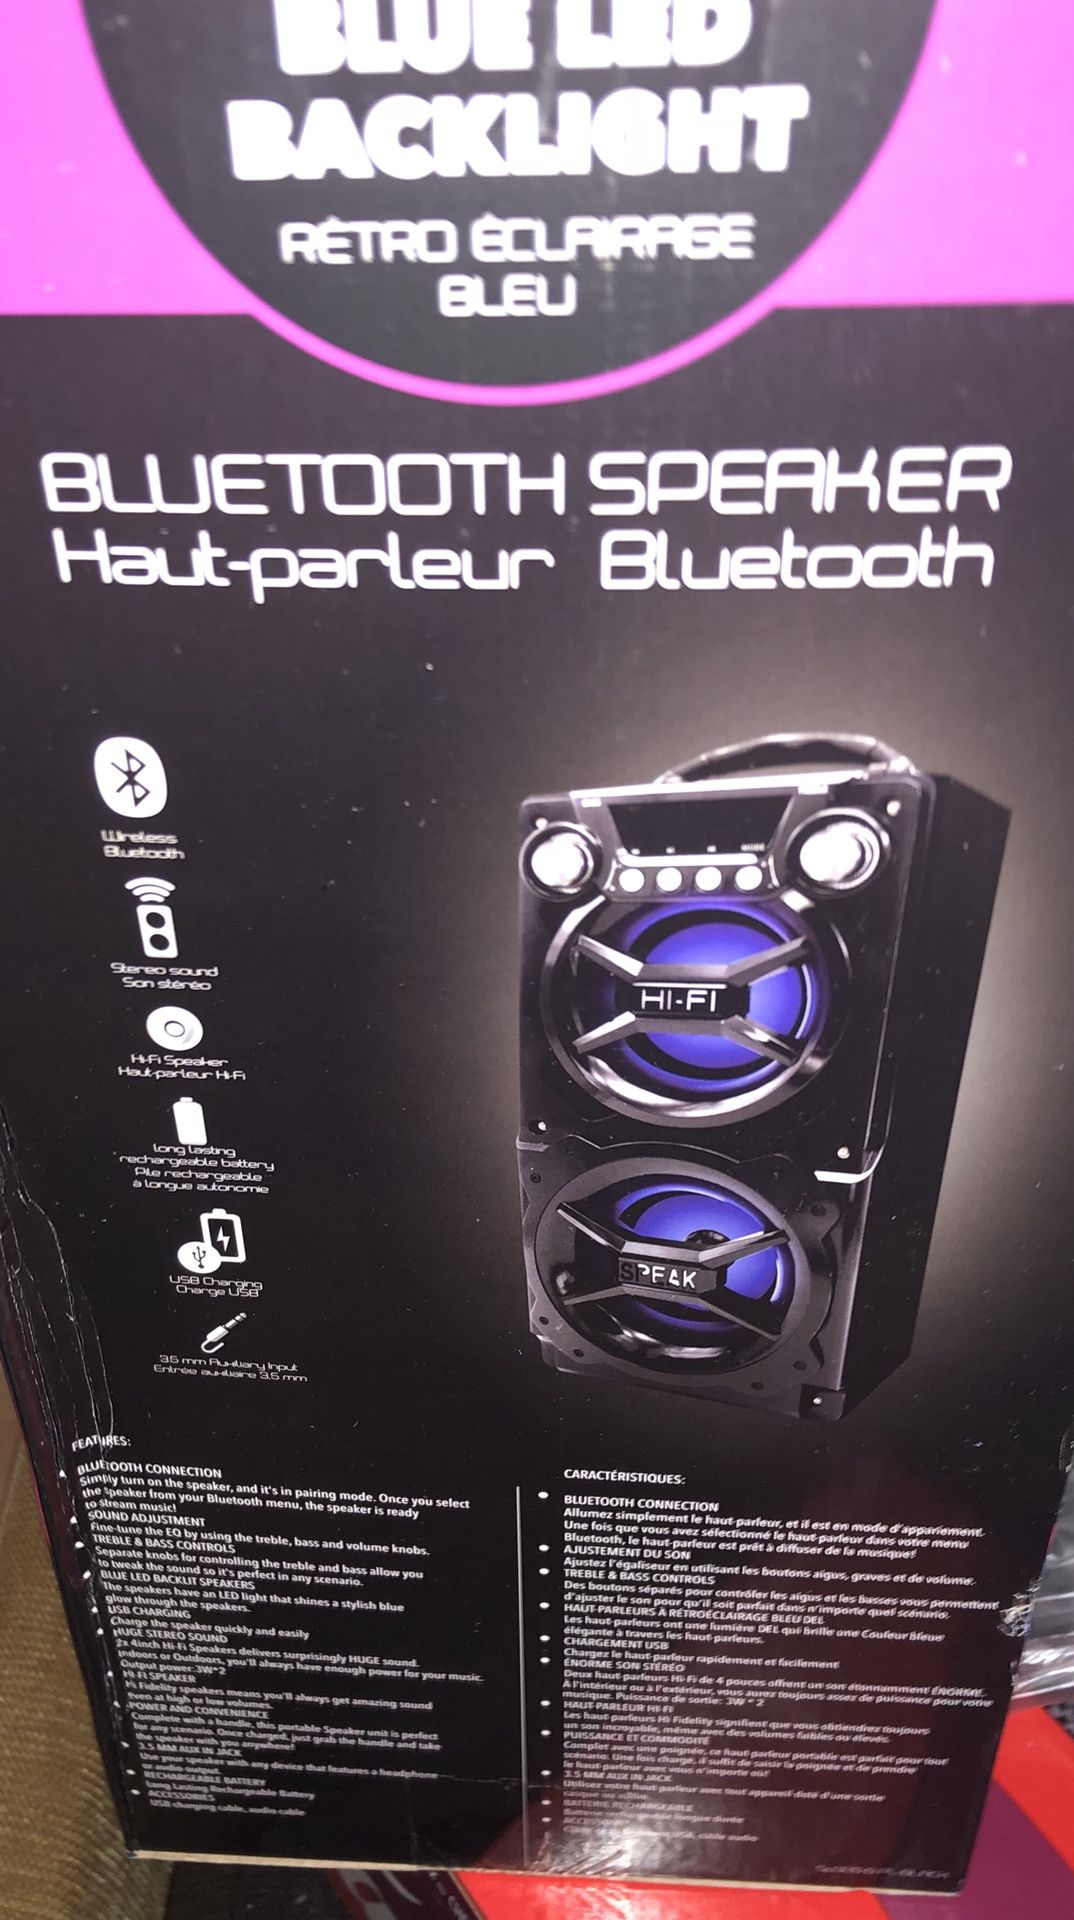 Sylvania Bluetooth speaker